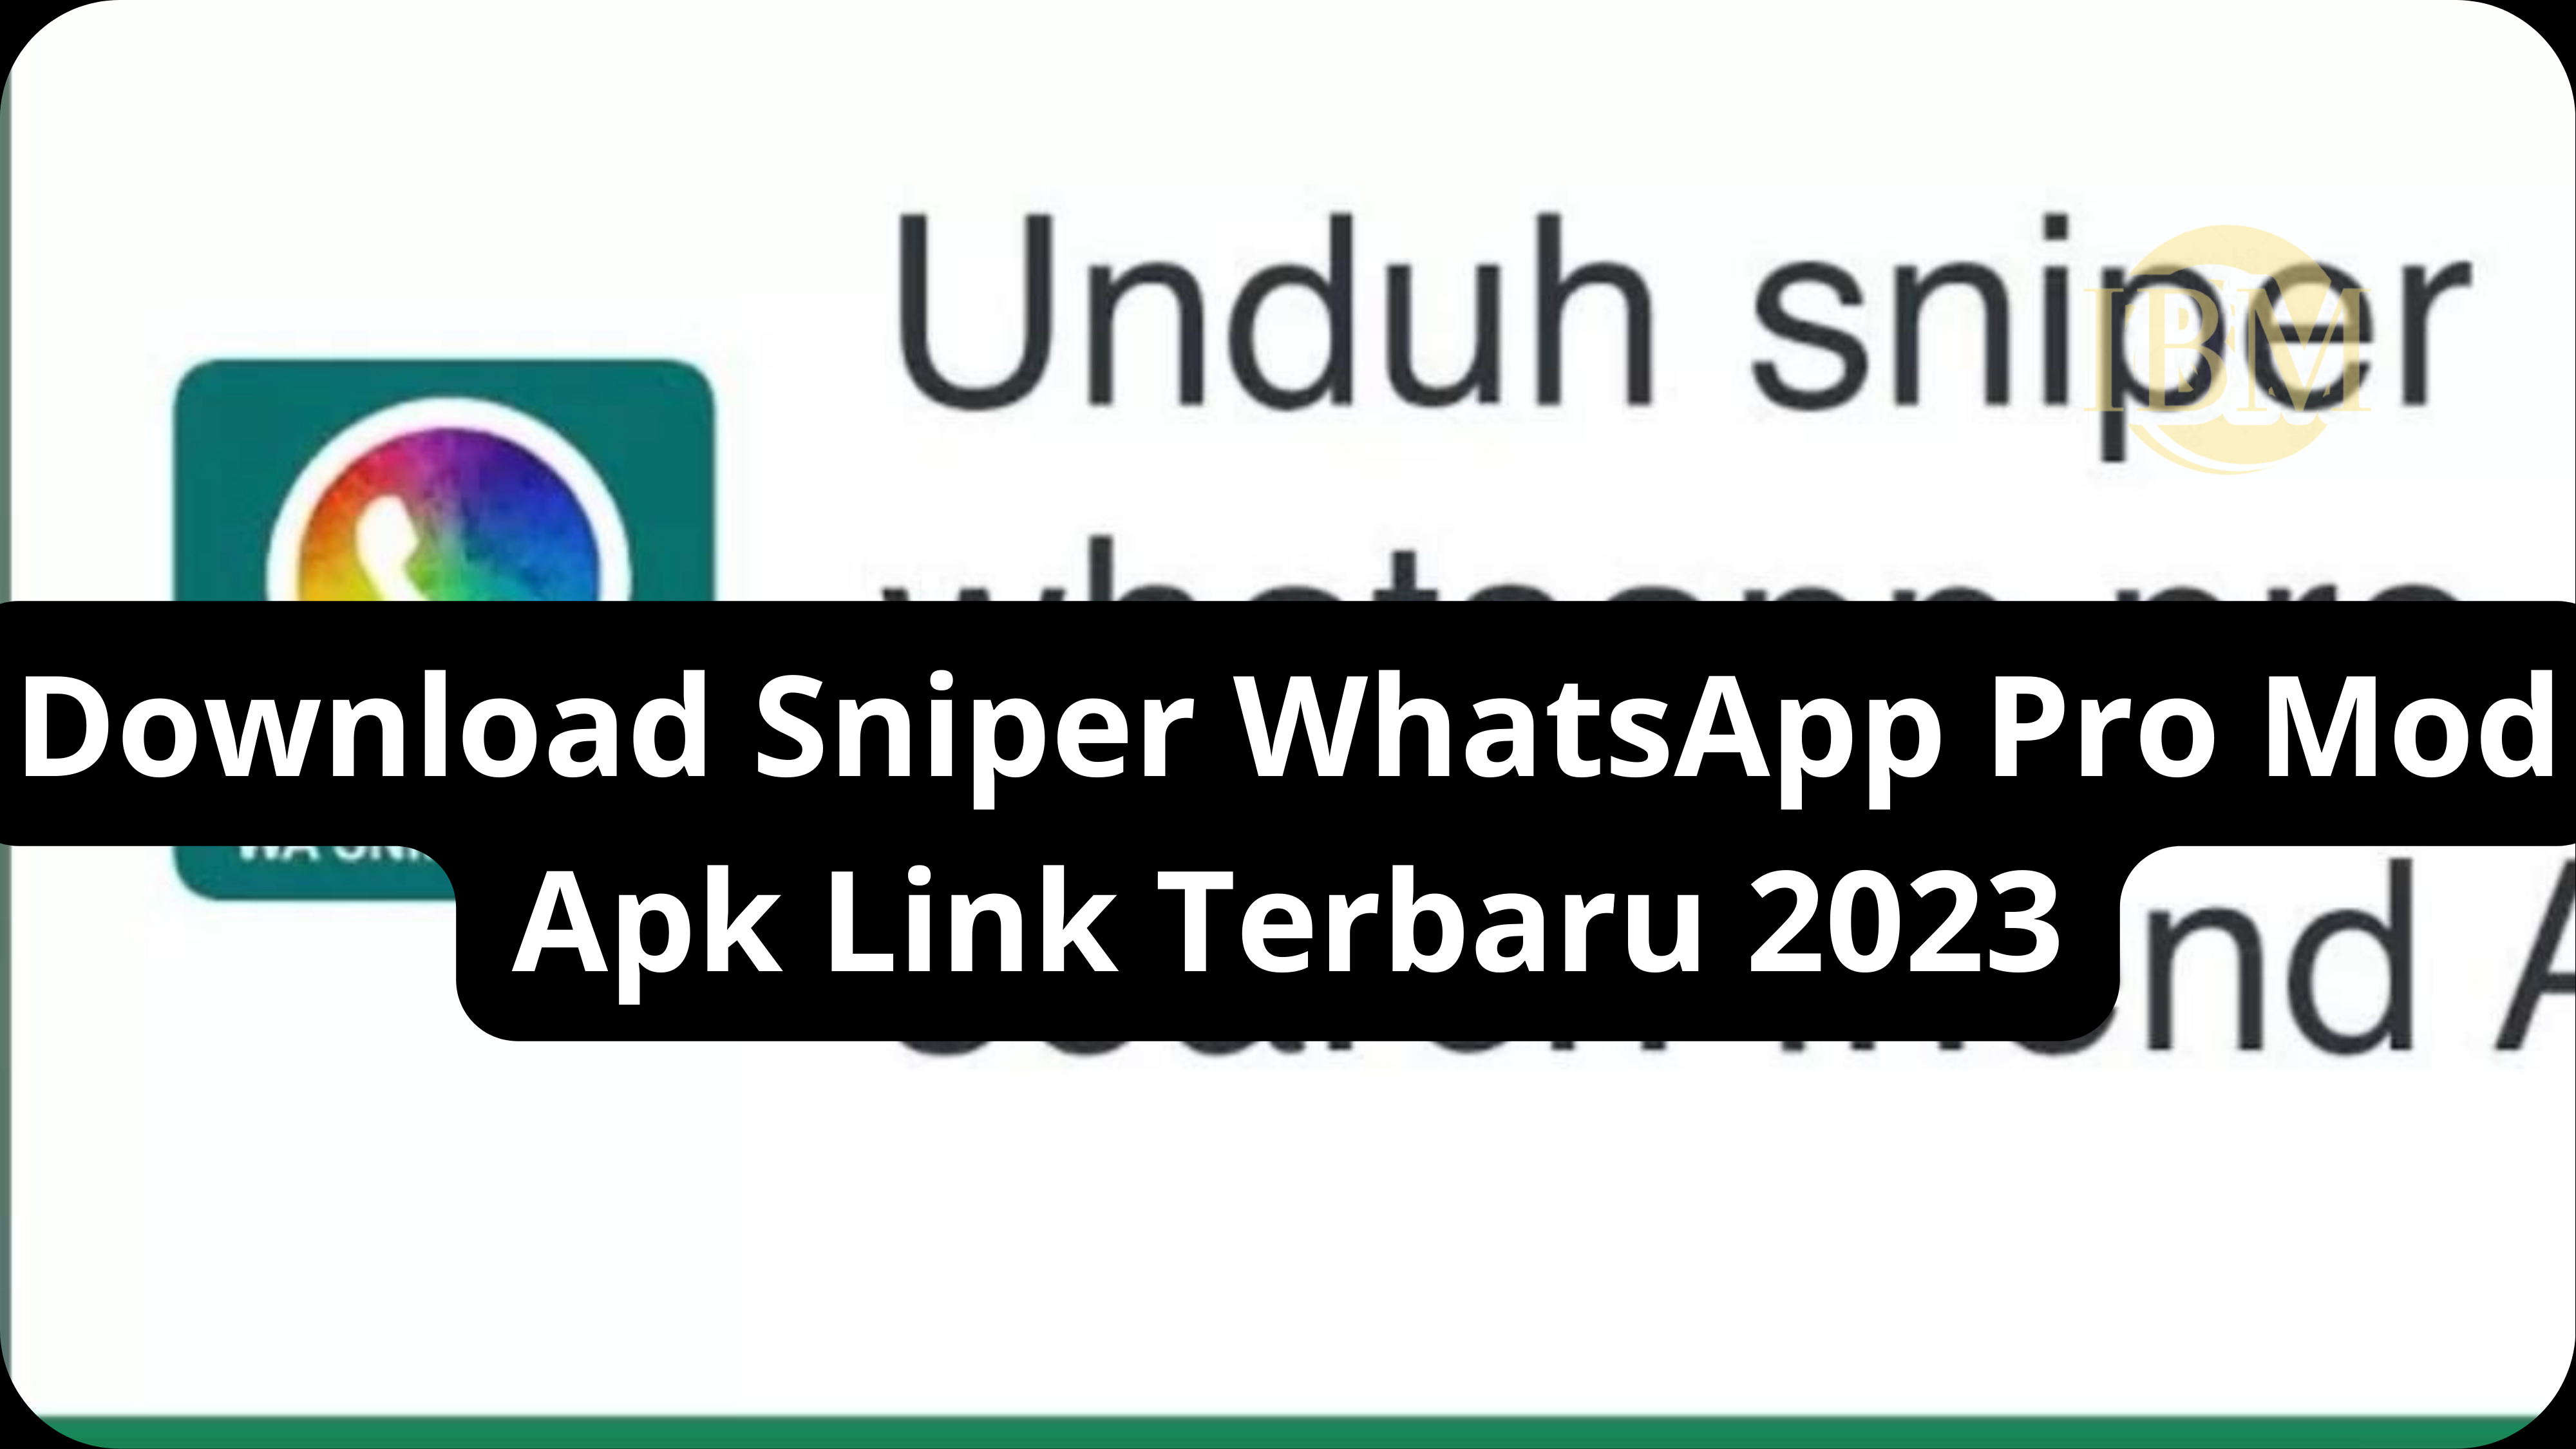 Download Sniper WhatsApp Pro Mod Apk Link Terbaru 2023